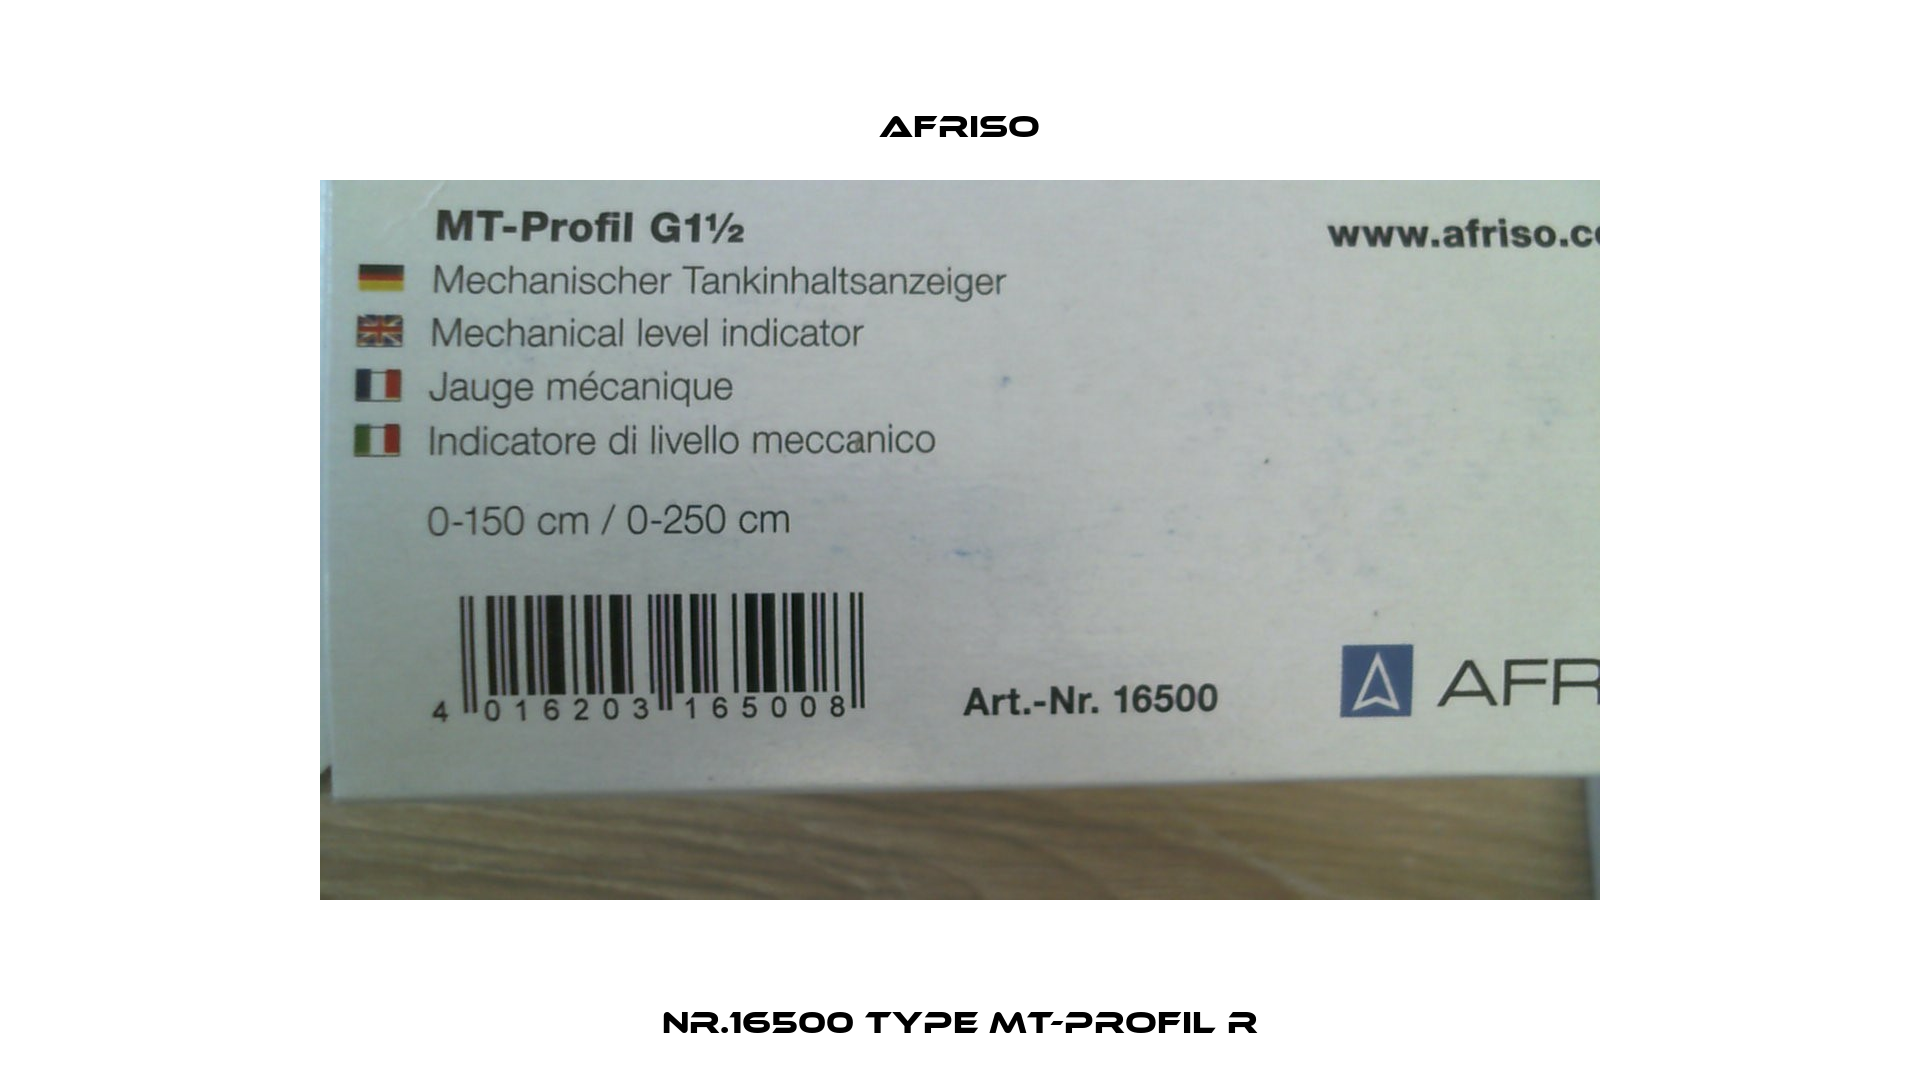 Nr.16500 Type MT-Profil R Afriso